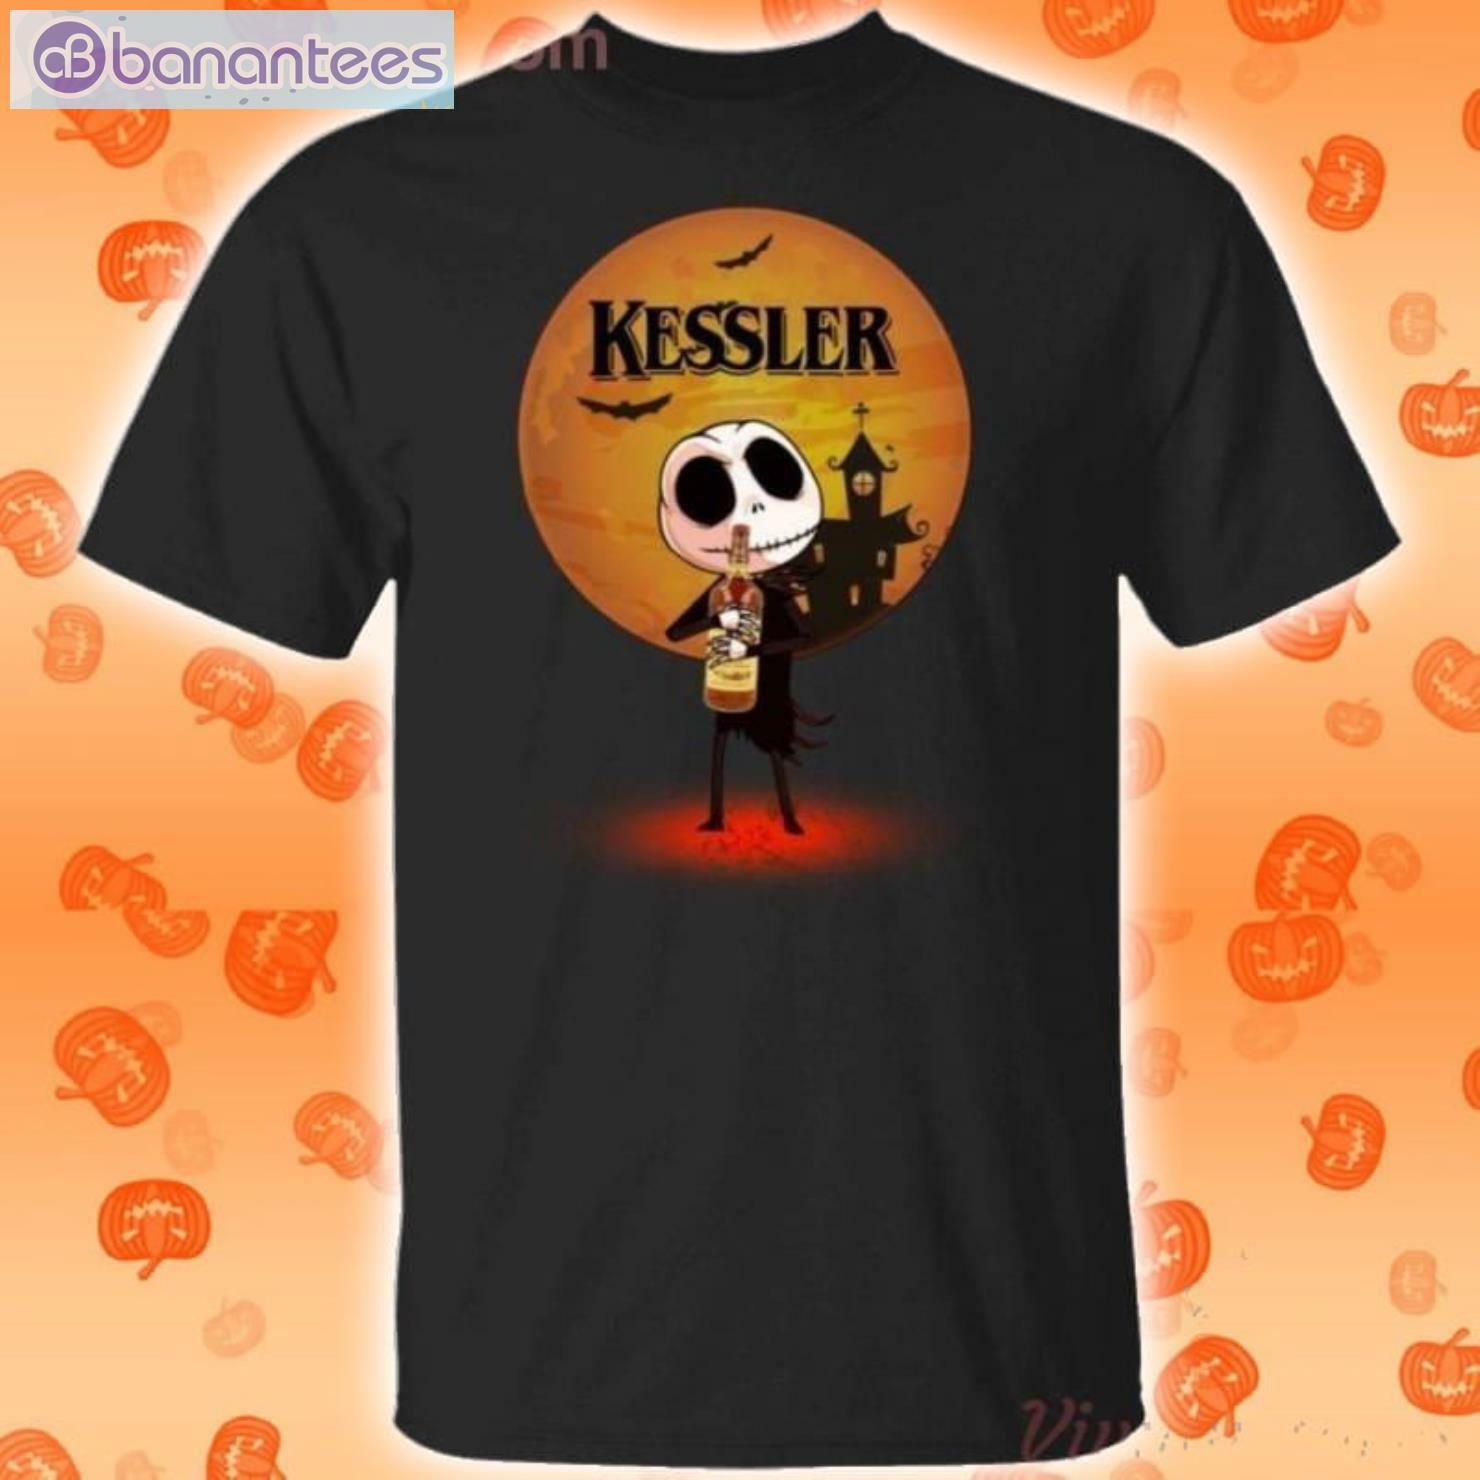 Jack Skellington Holding Kessler American Whisky Halloween T-Shirt Product Photo 1 Product photo 1